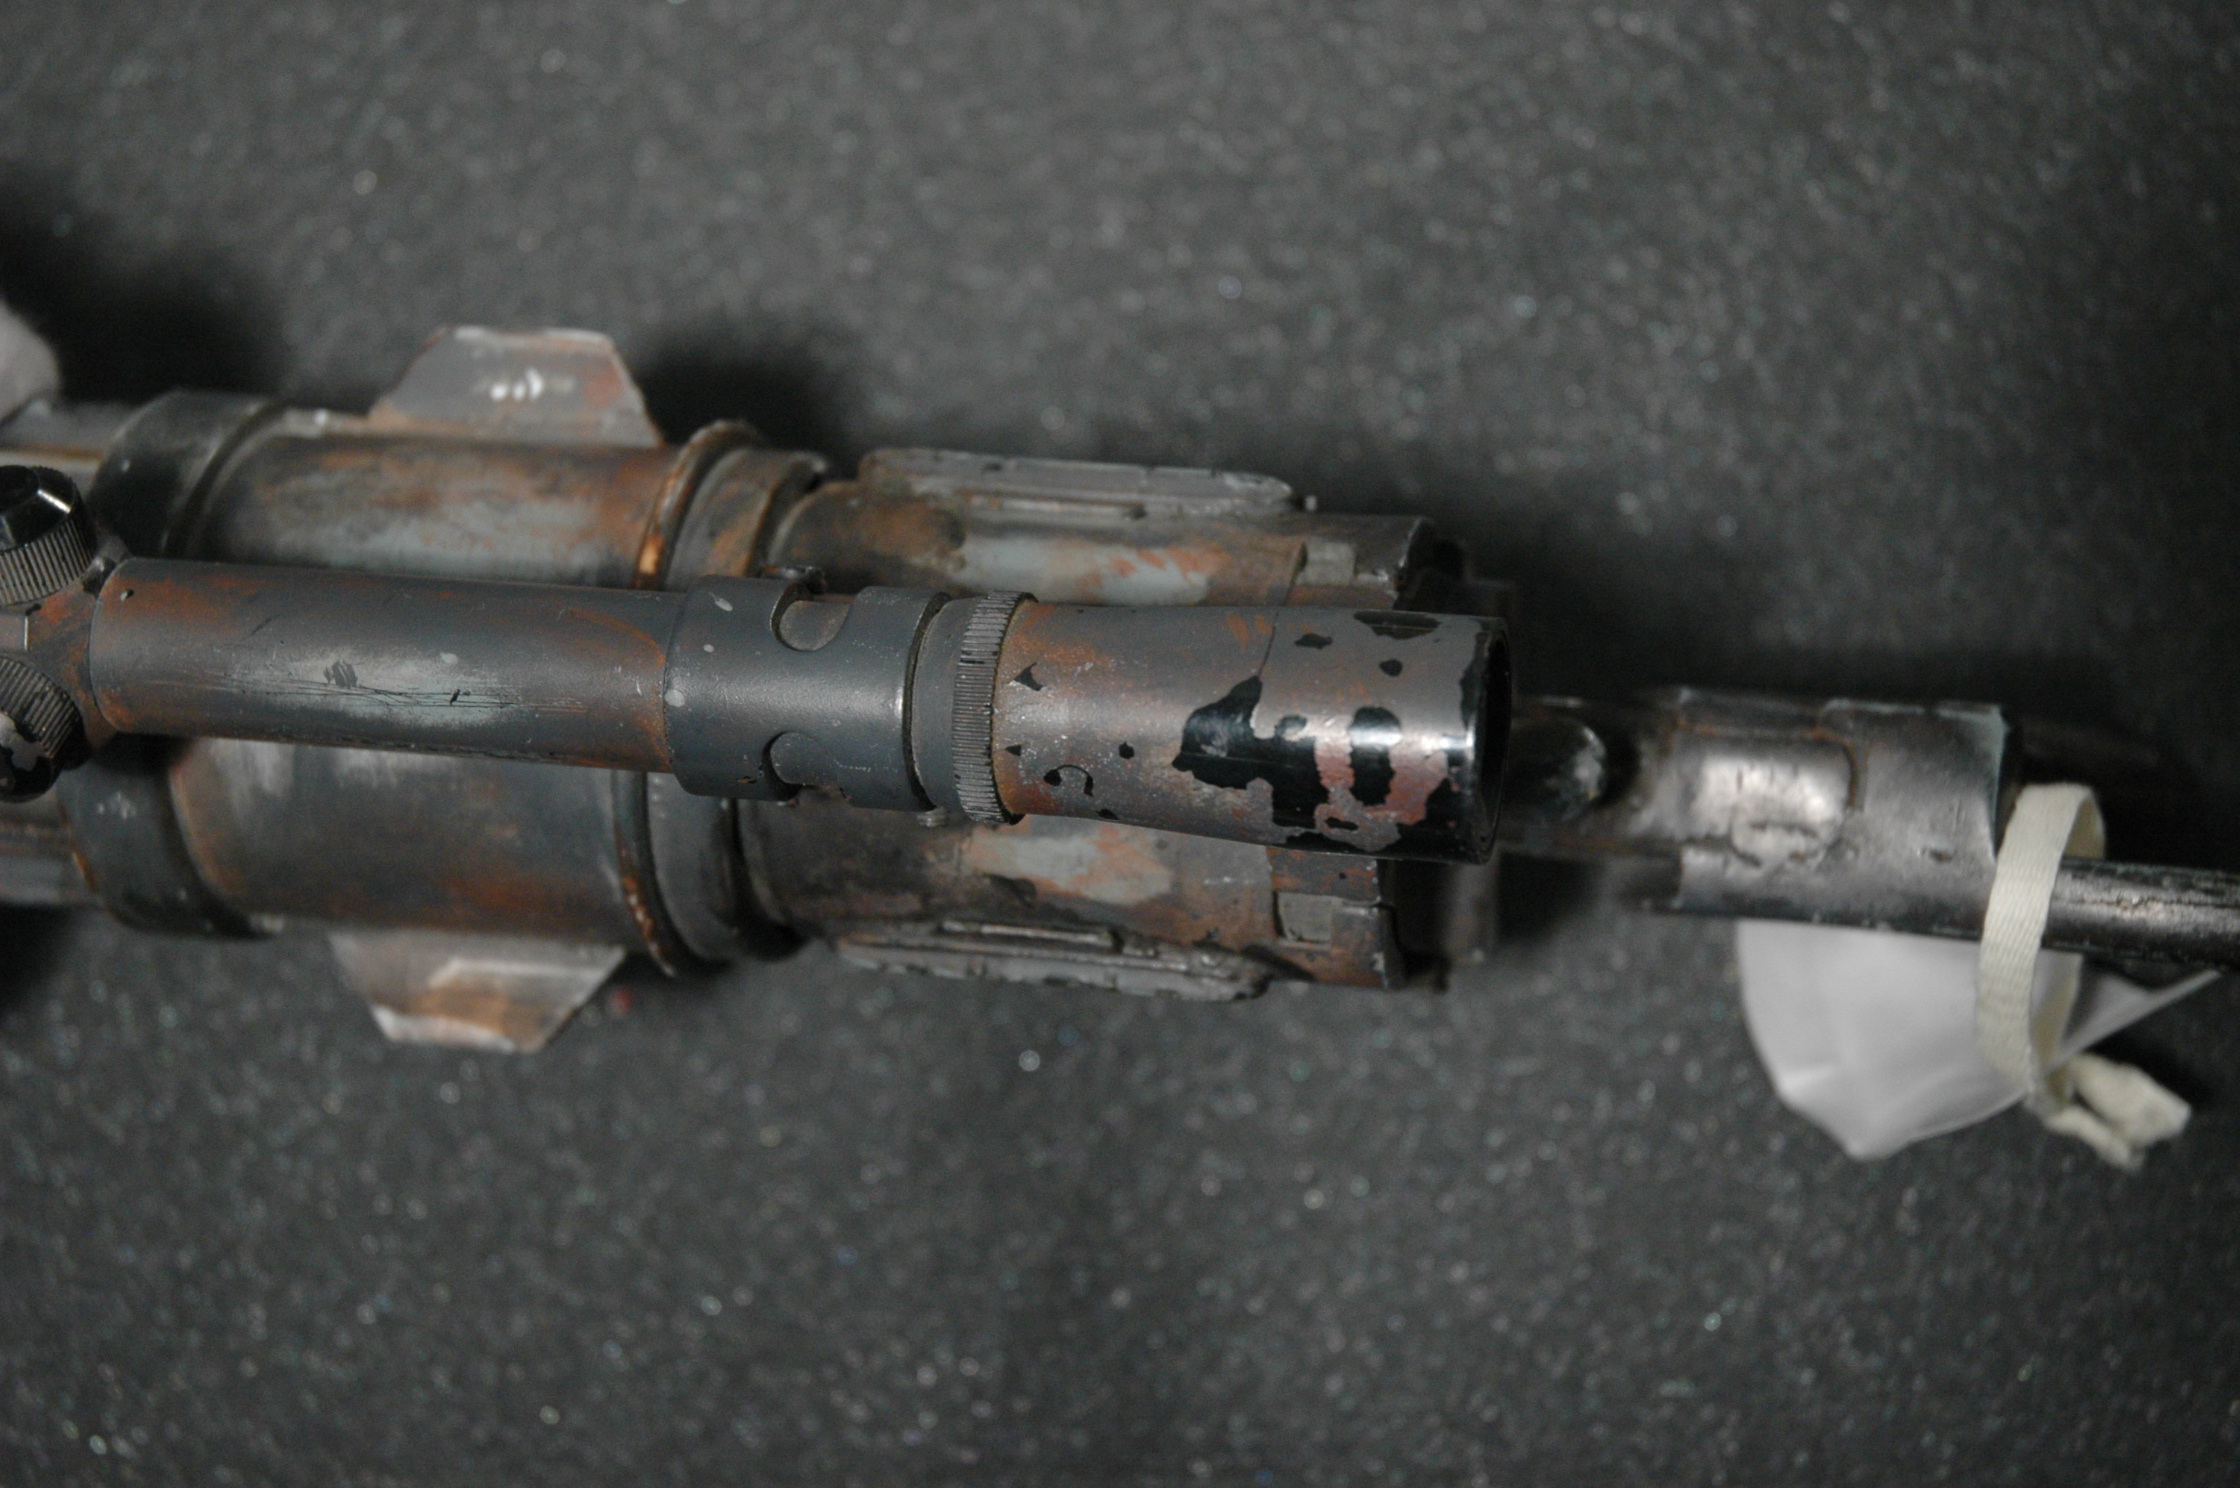 Boba Fett Return of the Jedi Blaster Rifle